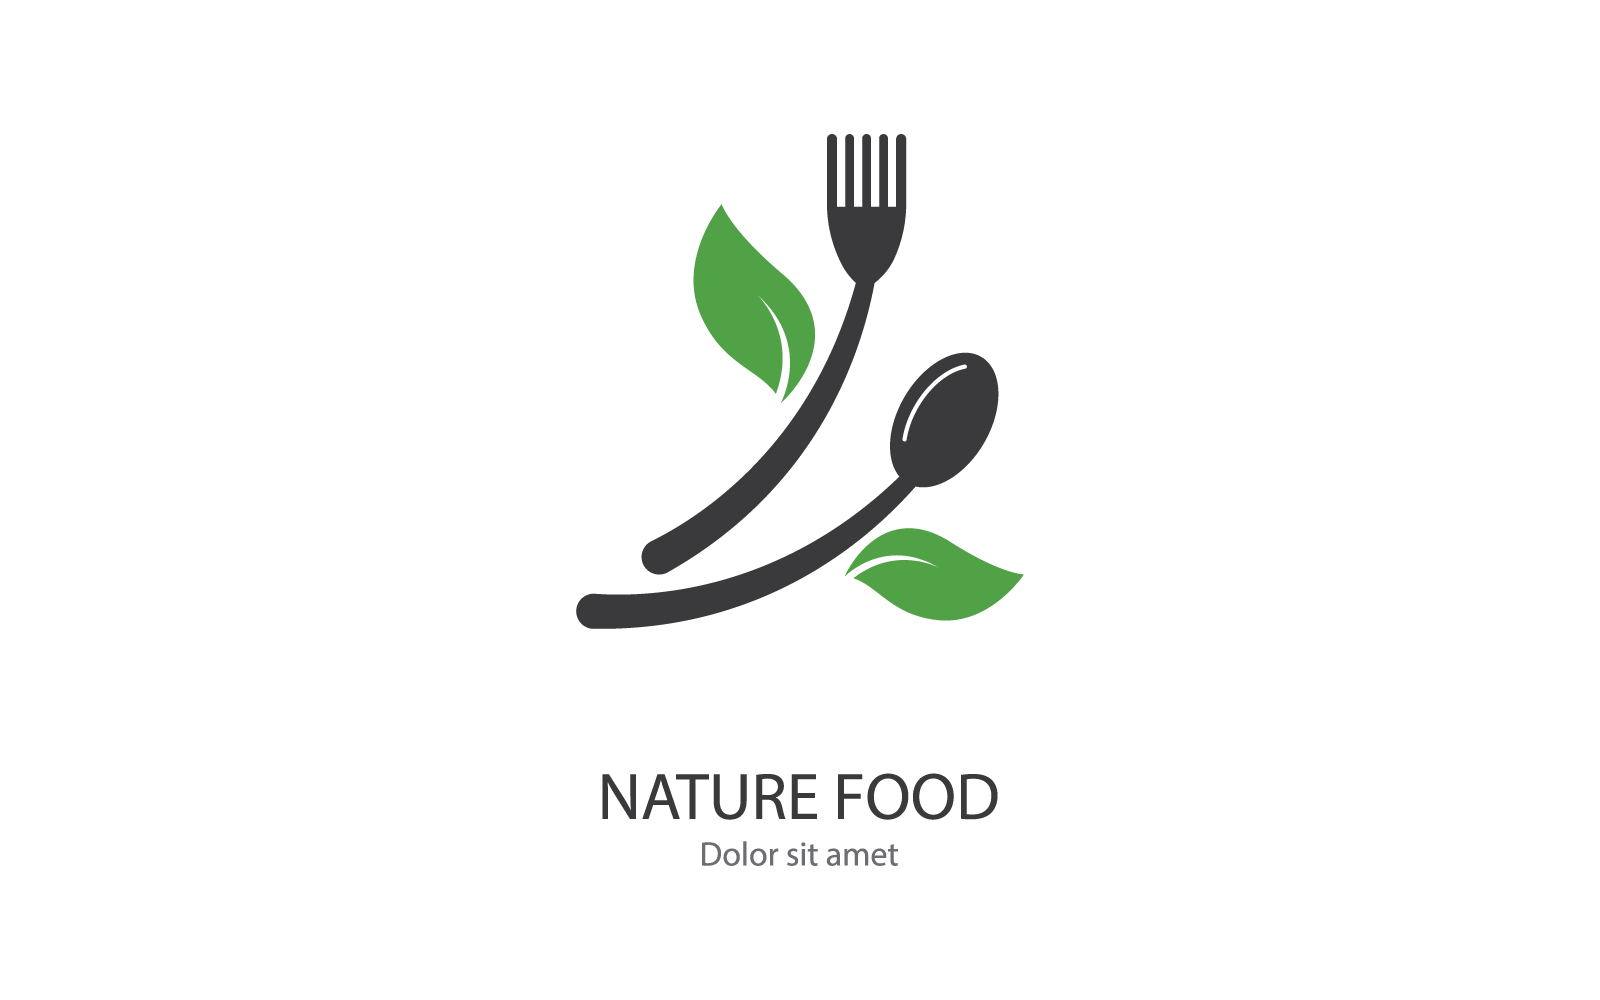 Nature food logo vector design template